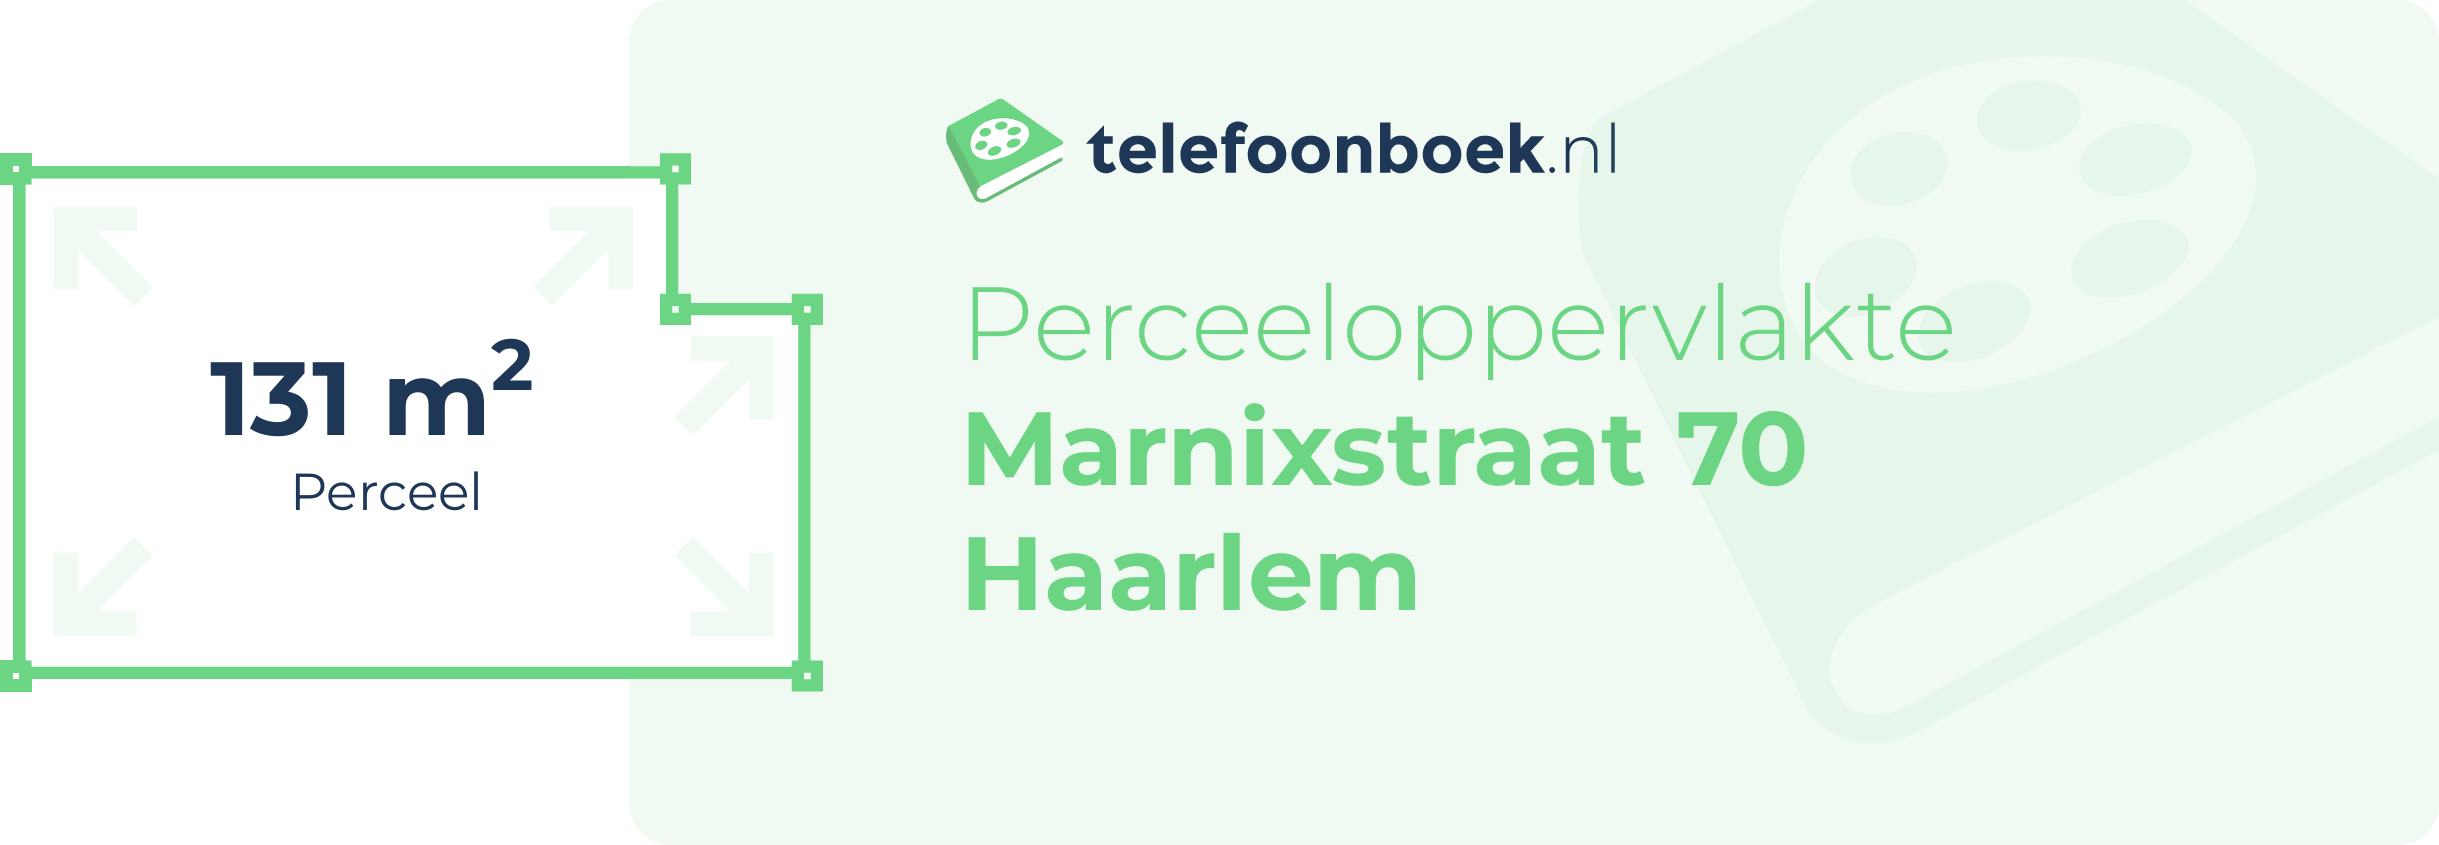 Perceeloppervlakte Marnixstraat 70 Haarlem